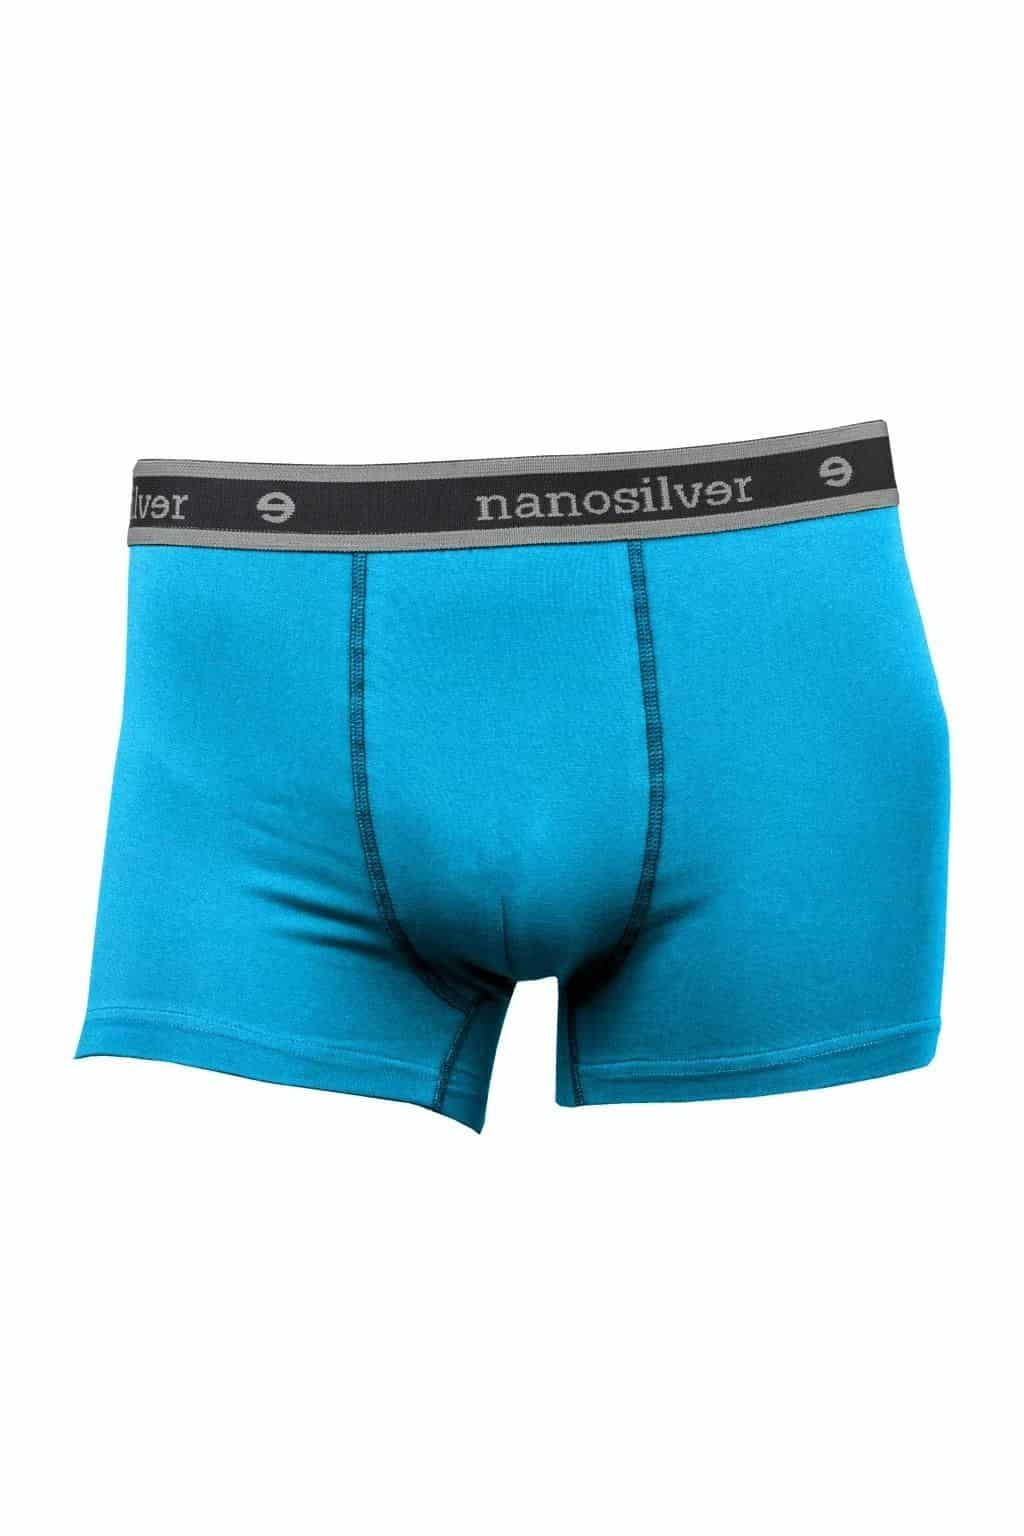 nanosilver® Nano boxerky s gumou nanosilver bez zadního švu – modré Velikost: XXL